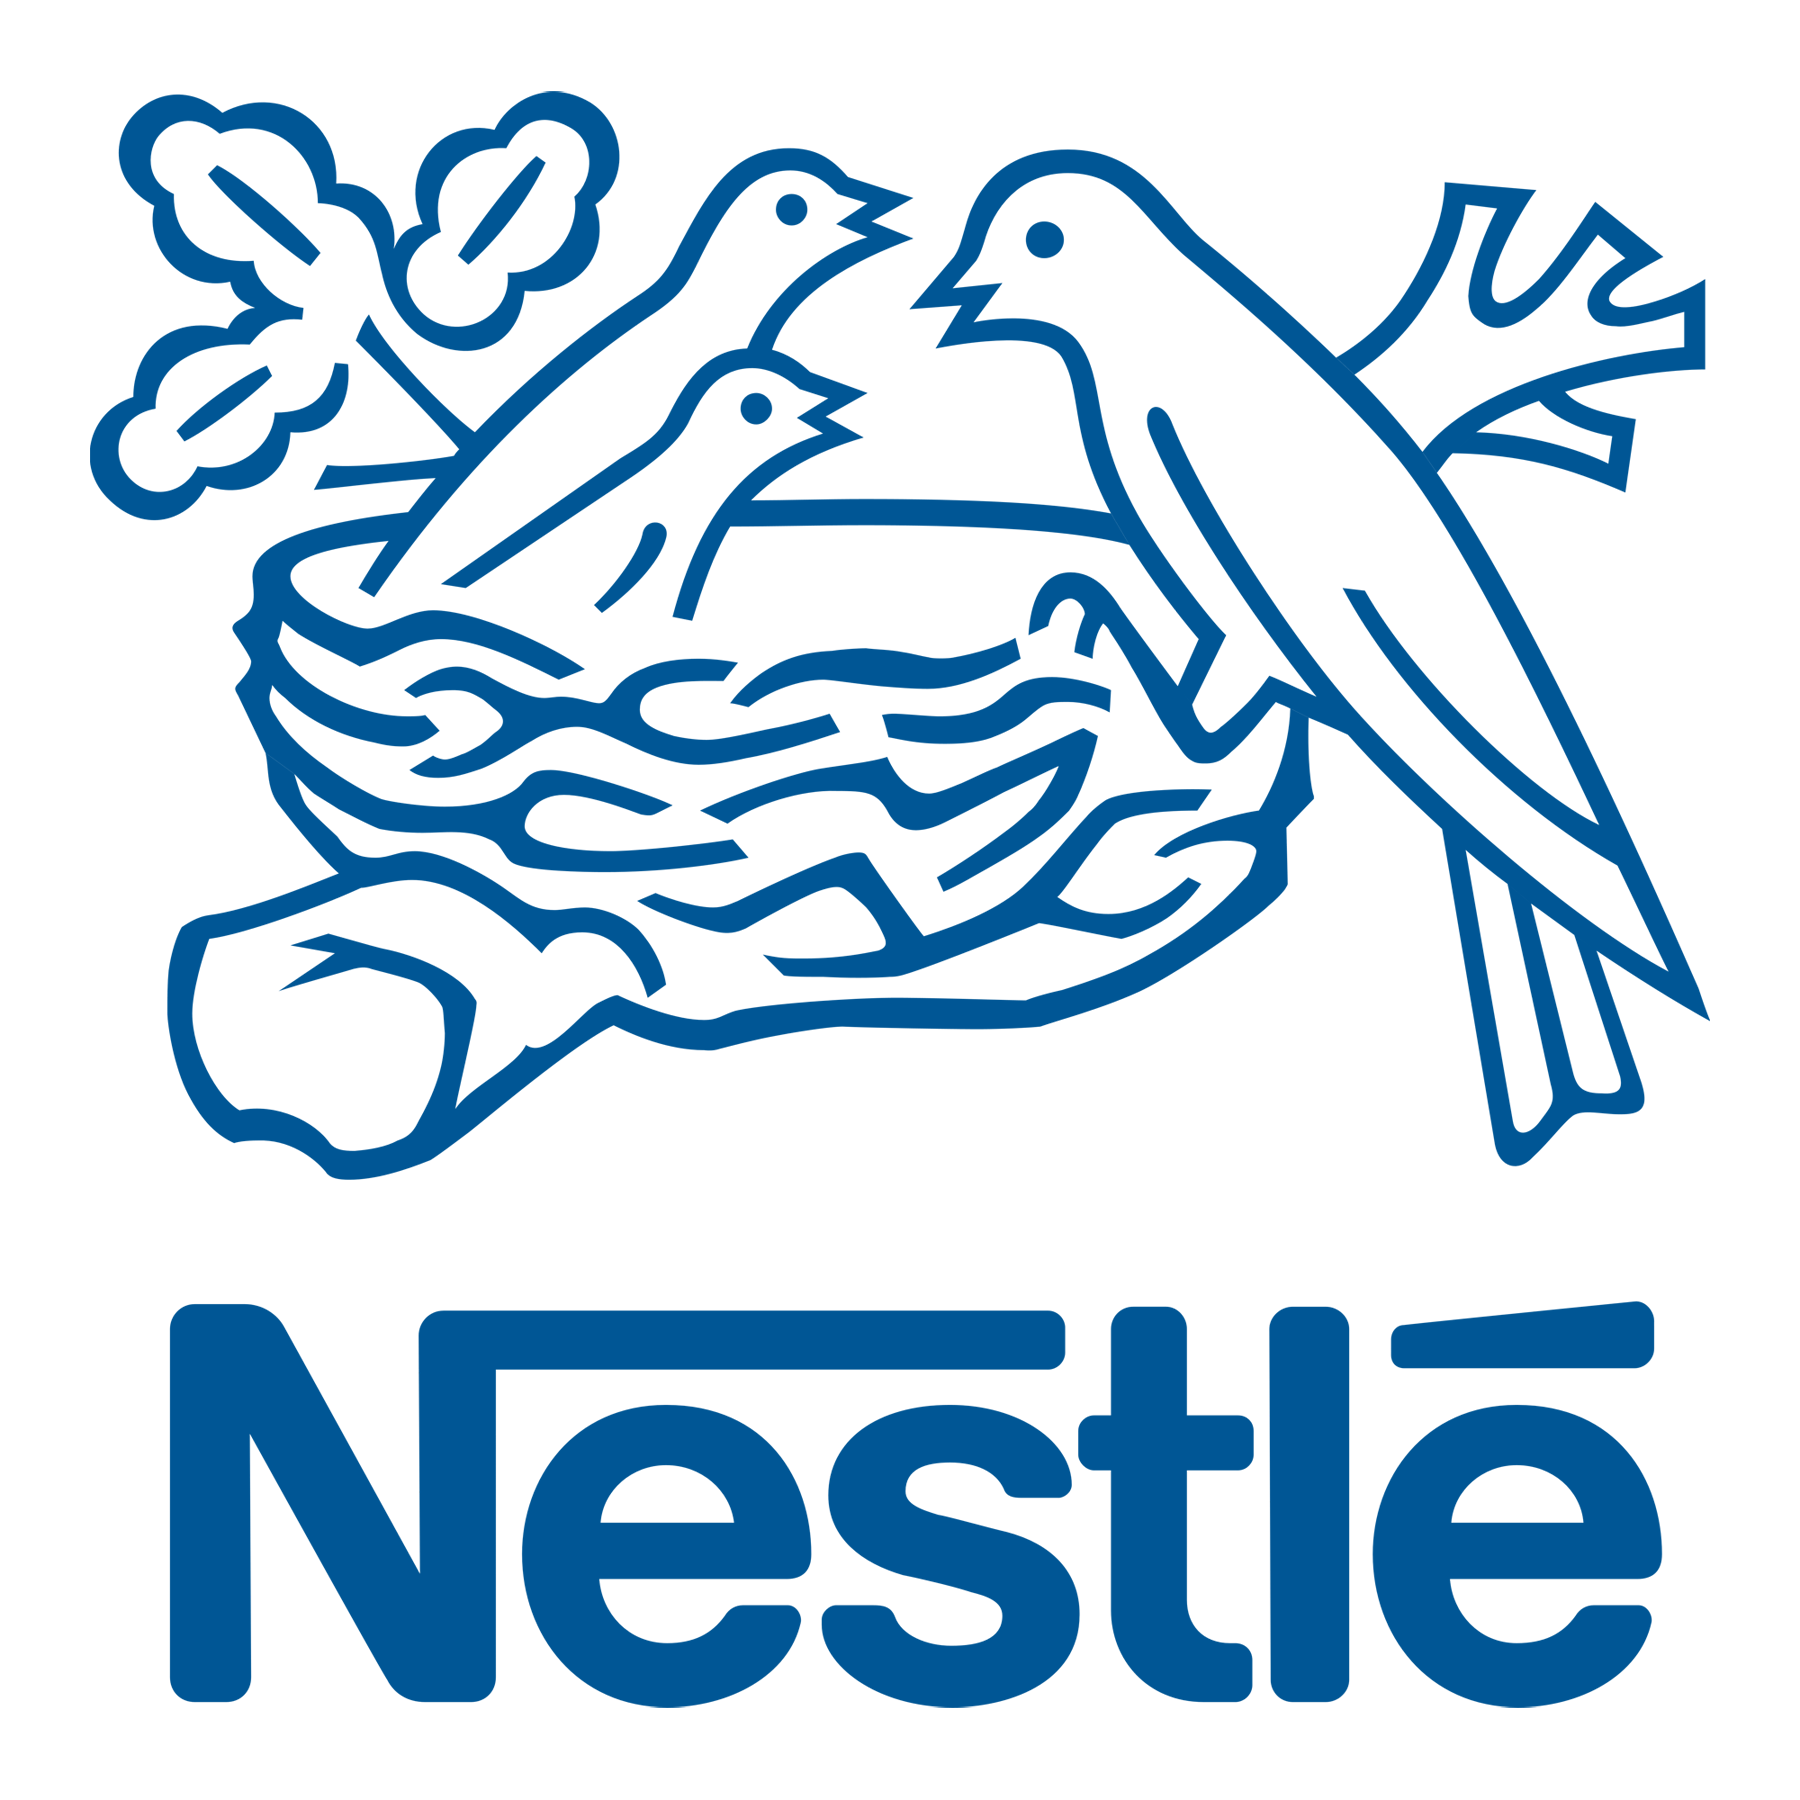 Nestle logo.png